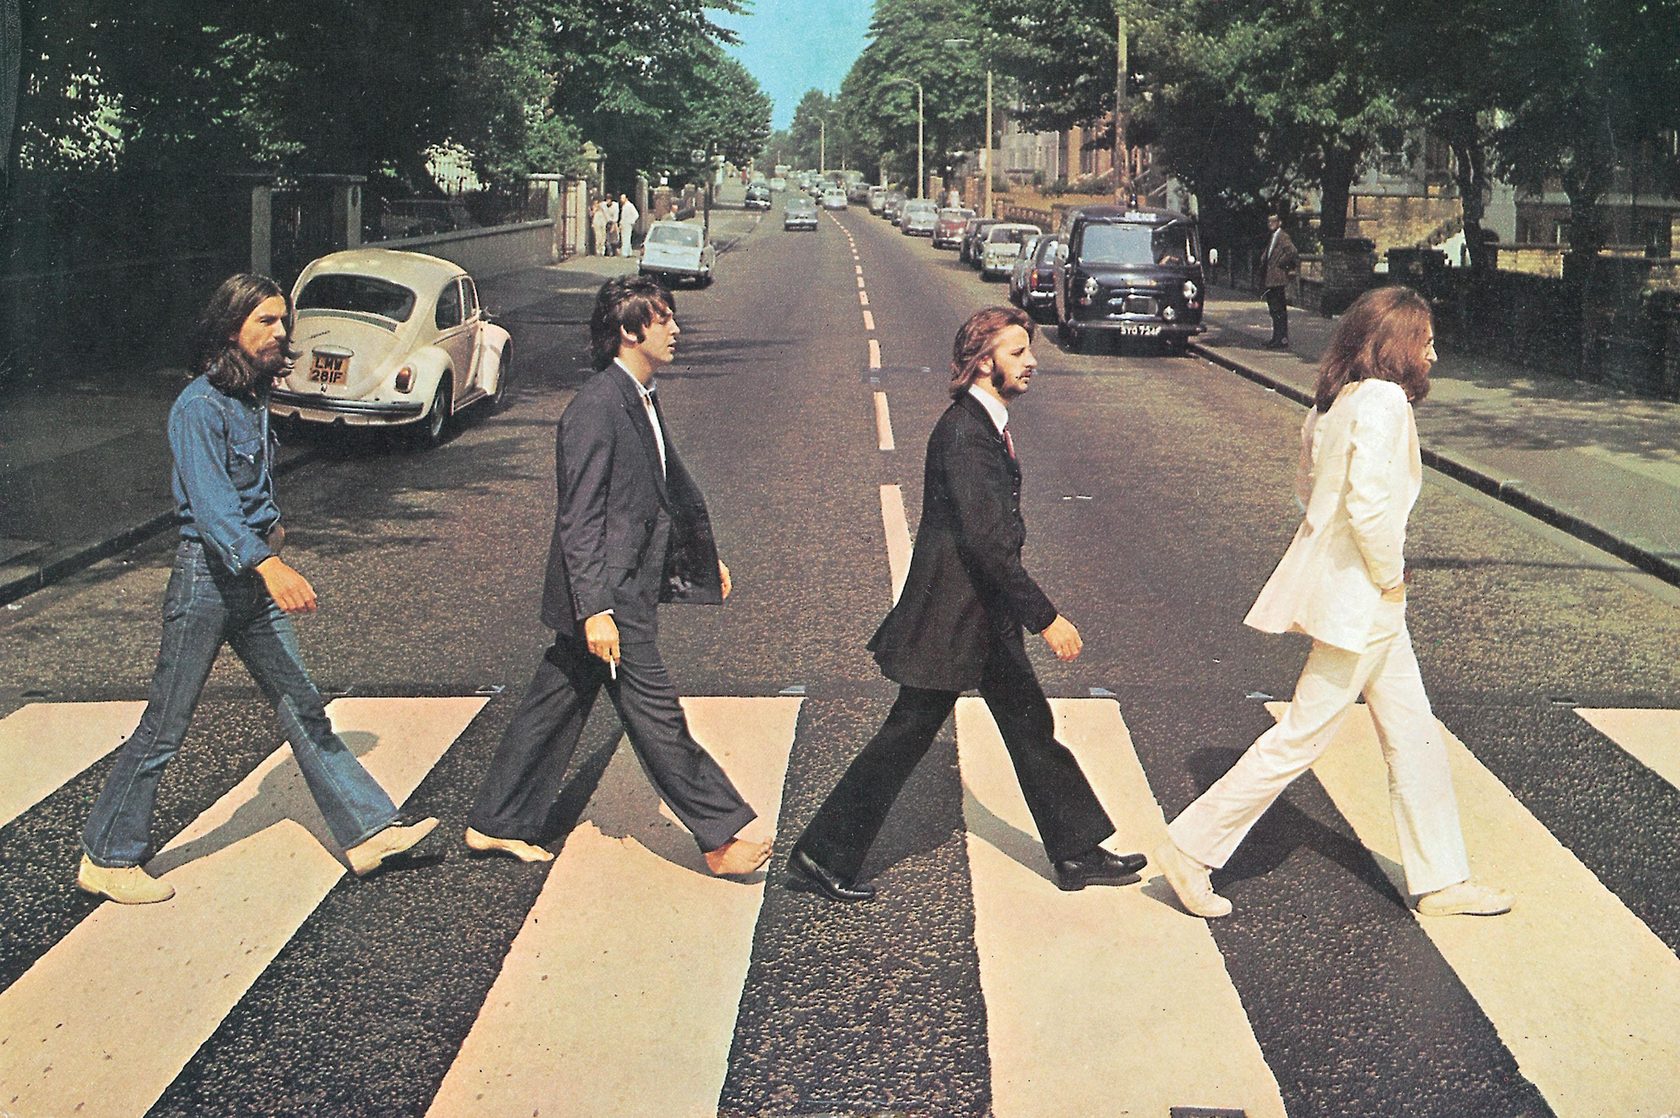 1680x1118, 476 Kb / The Beatles, пешеходный переход, зебра, дорога, автомобили, четверо, Abbey Road